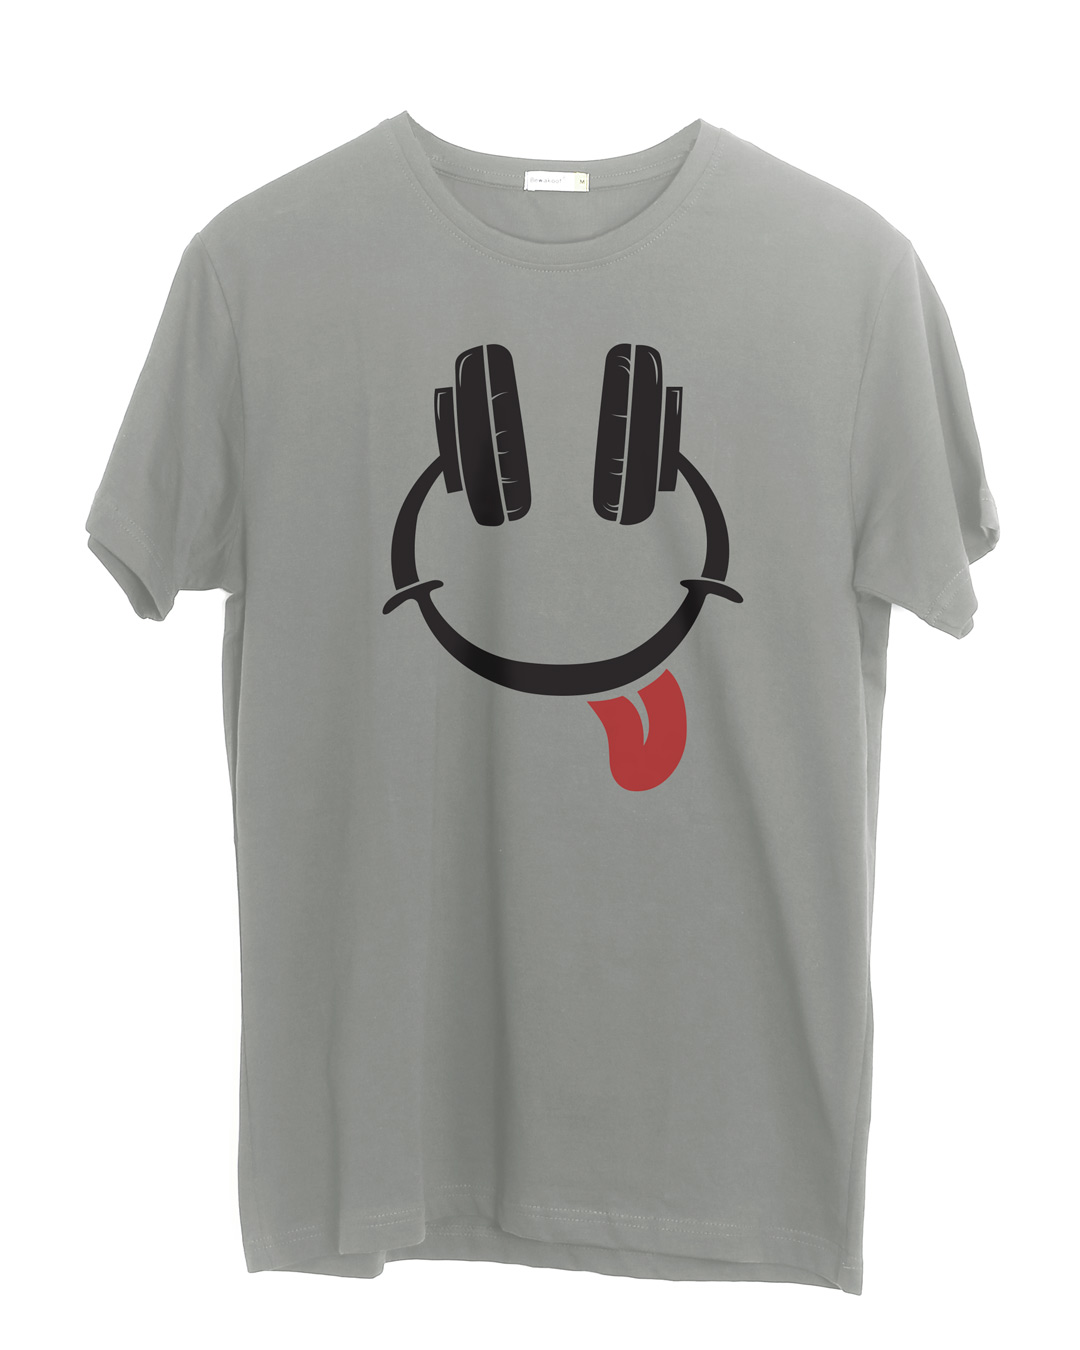 Buy Smiley Headphone Face Half Sleeve T-Shirt for Men grey Online at ...